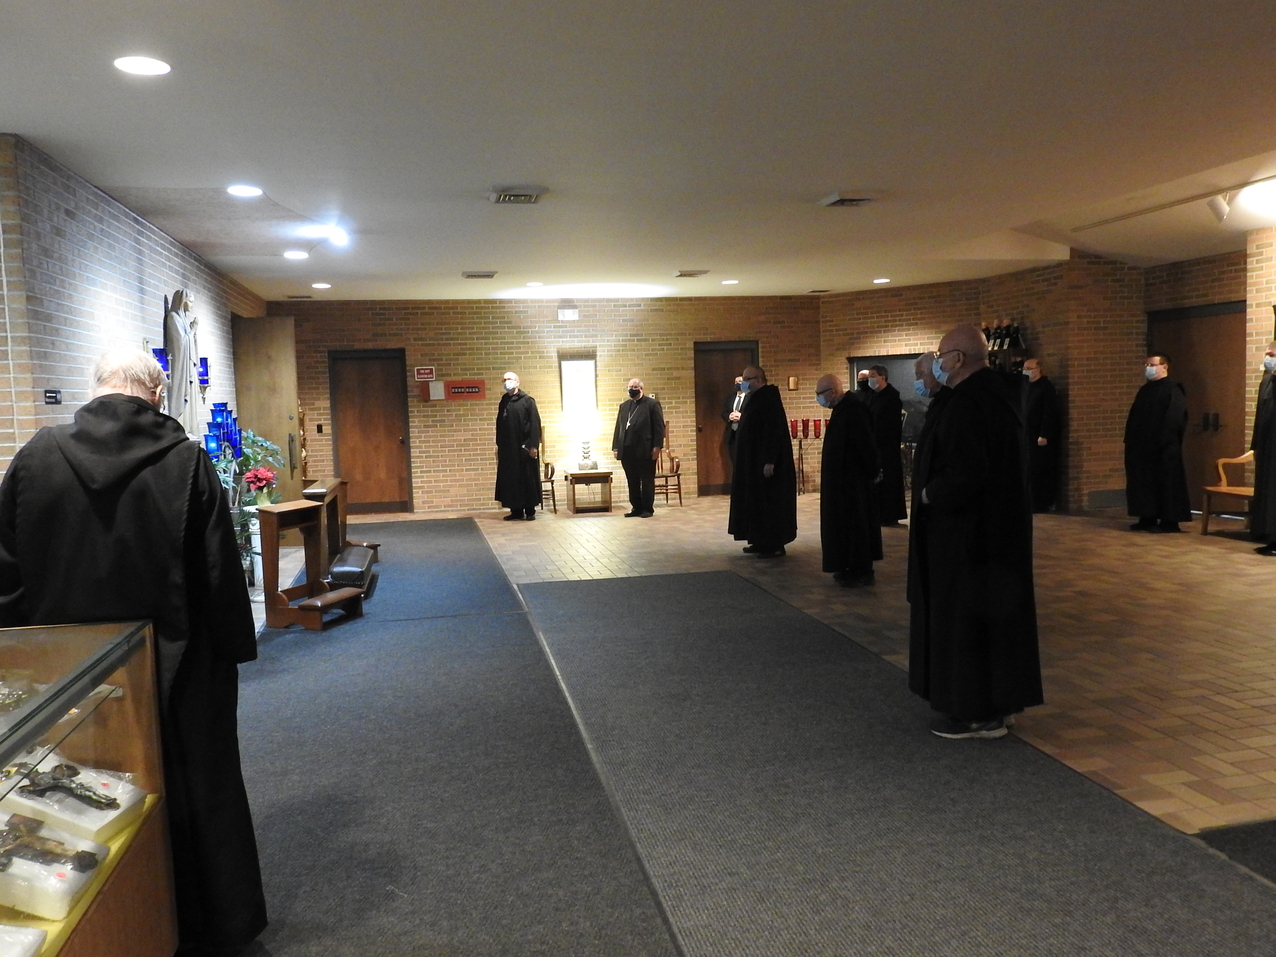 Benedictine Order of Cleveland welcomes bishop for prayer, hospitality